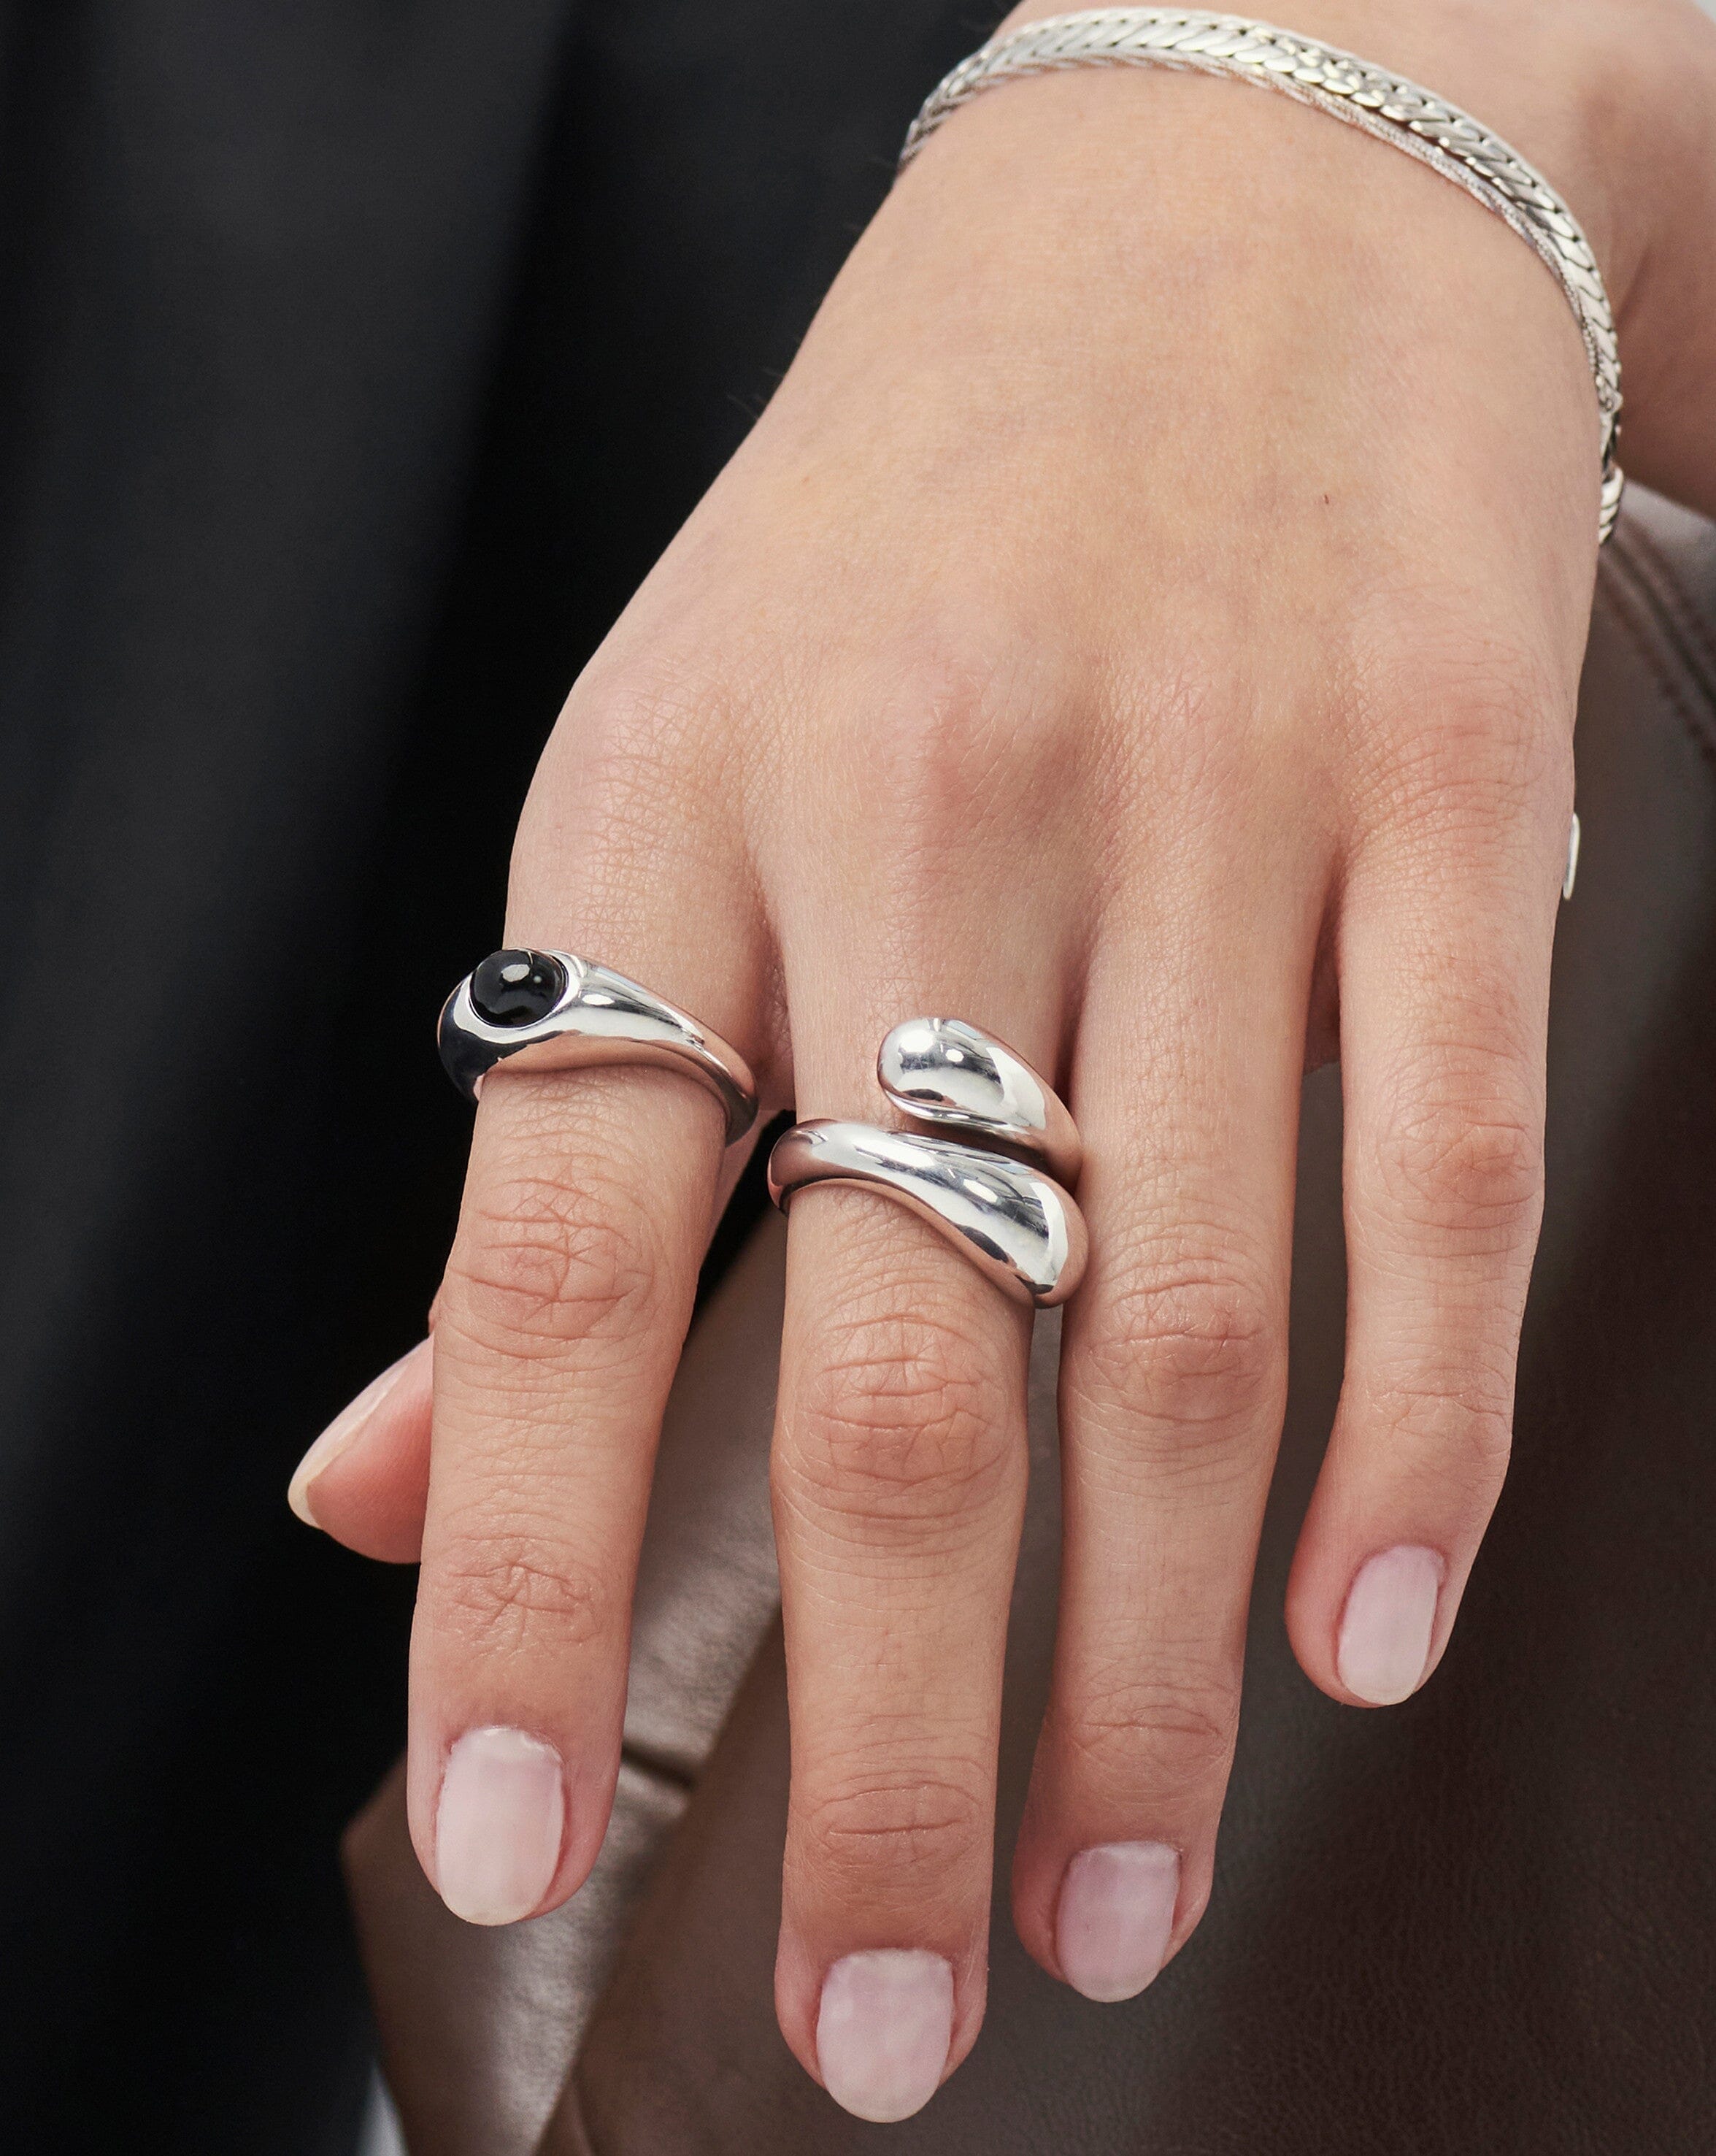 Savi Sculptural Gemstone Stacking Ring | Sterling Silver/Black Onyx Rings Missoma 